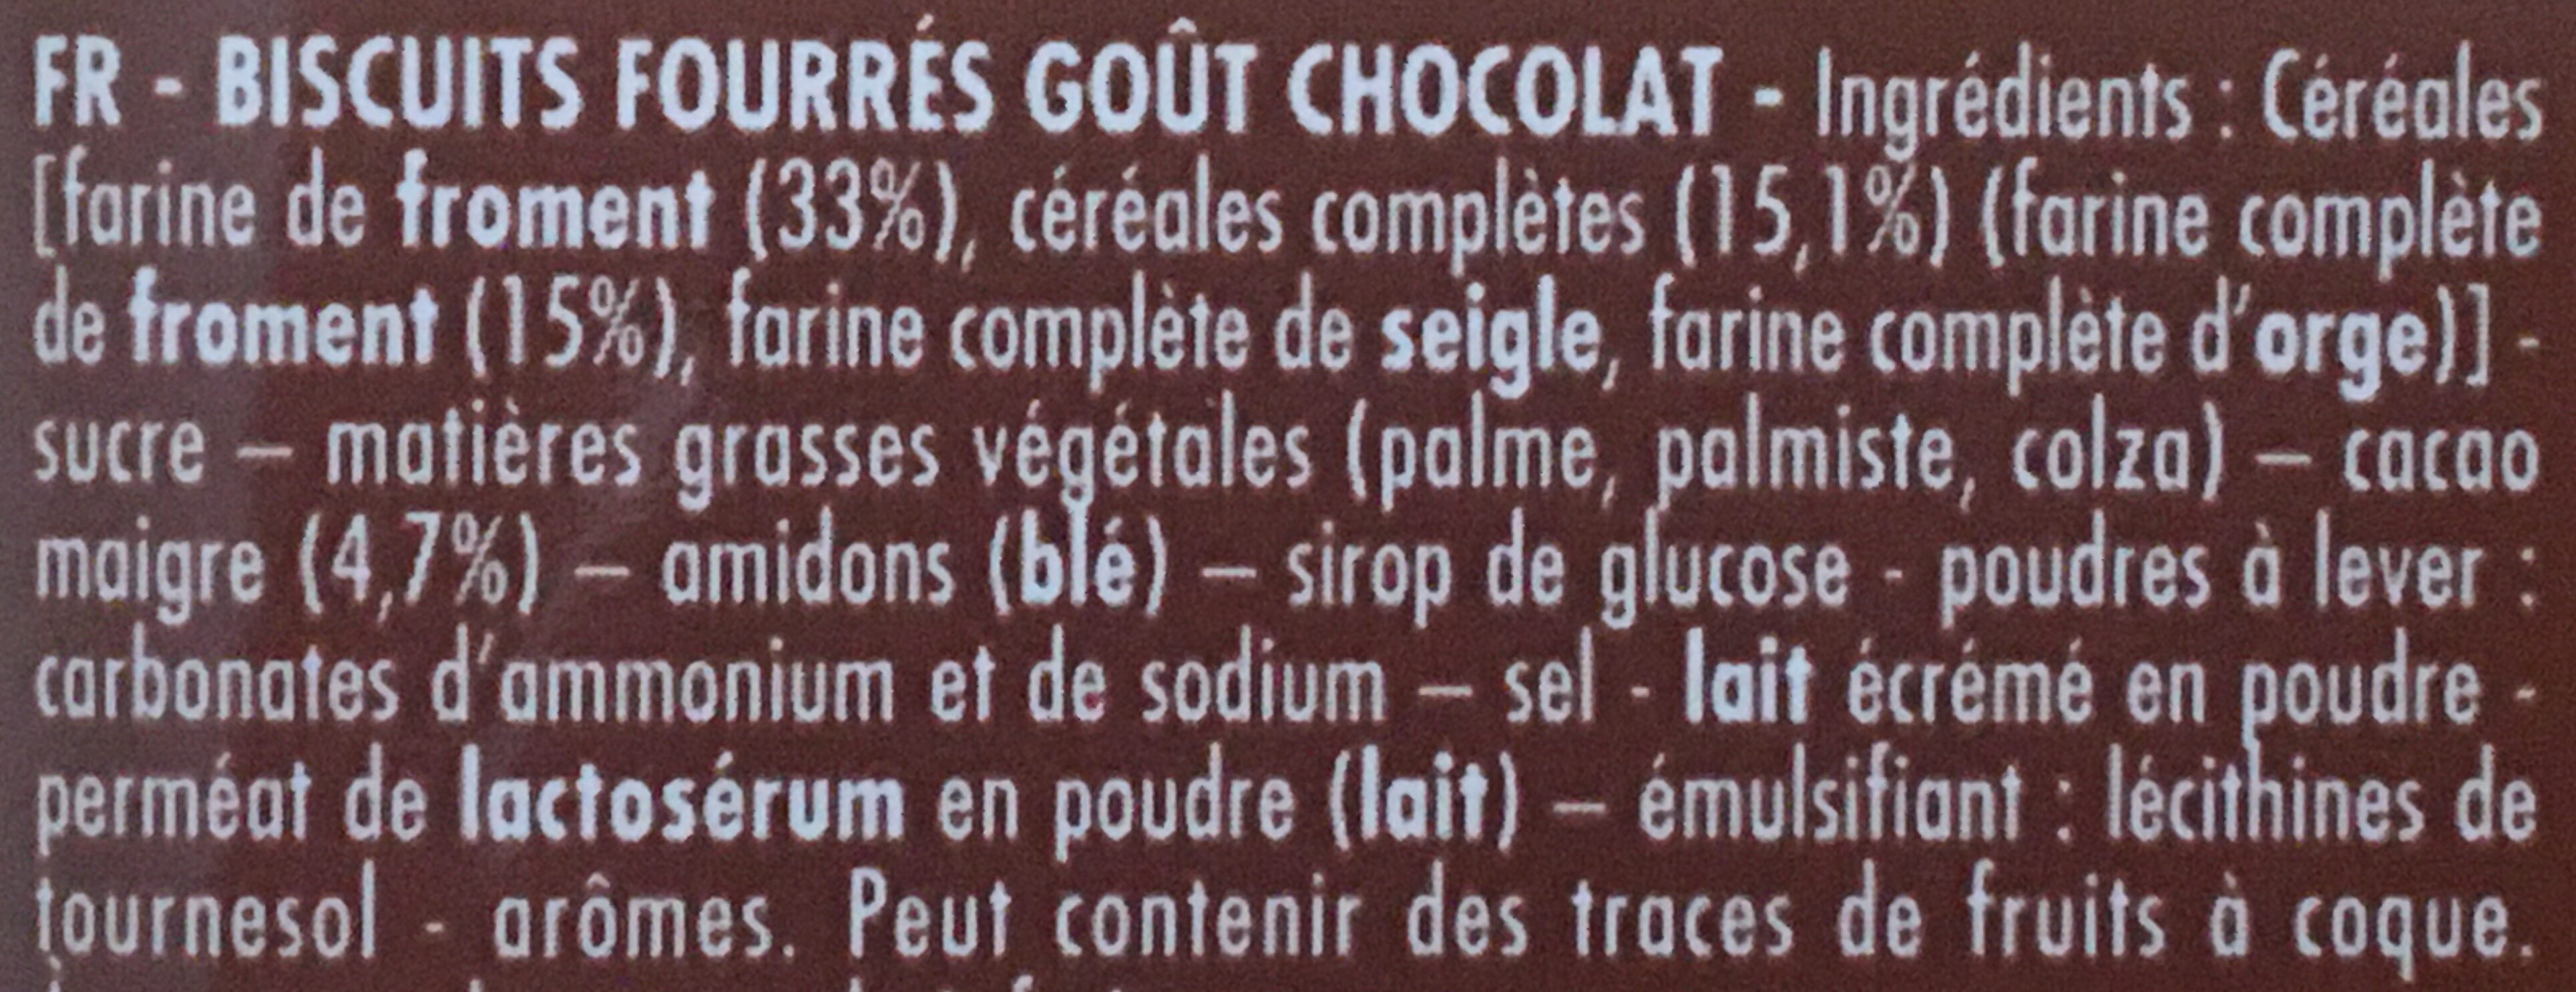 Biscuits goût chocolat - Ingredients - fr